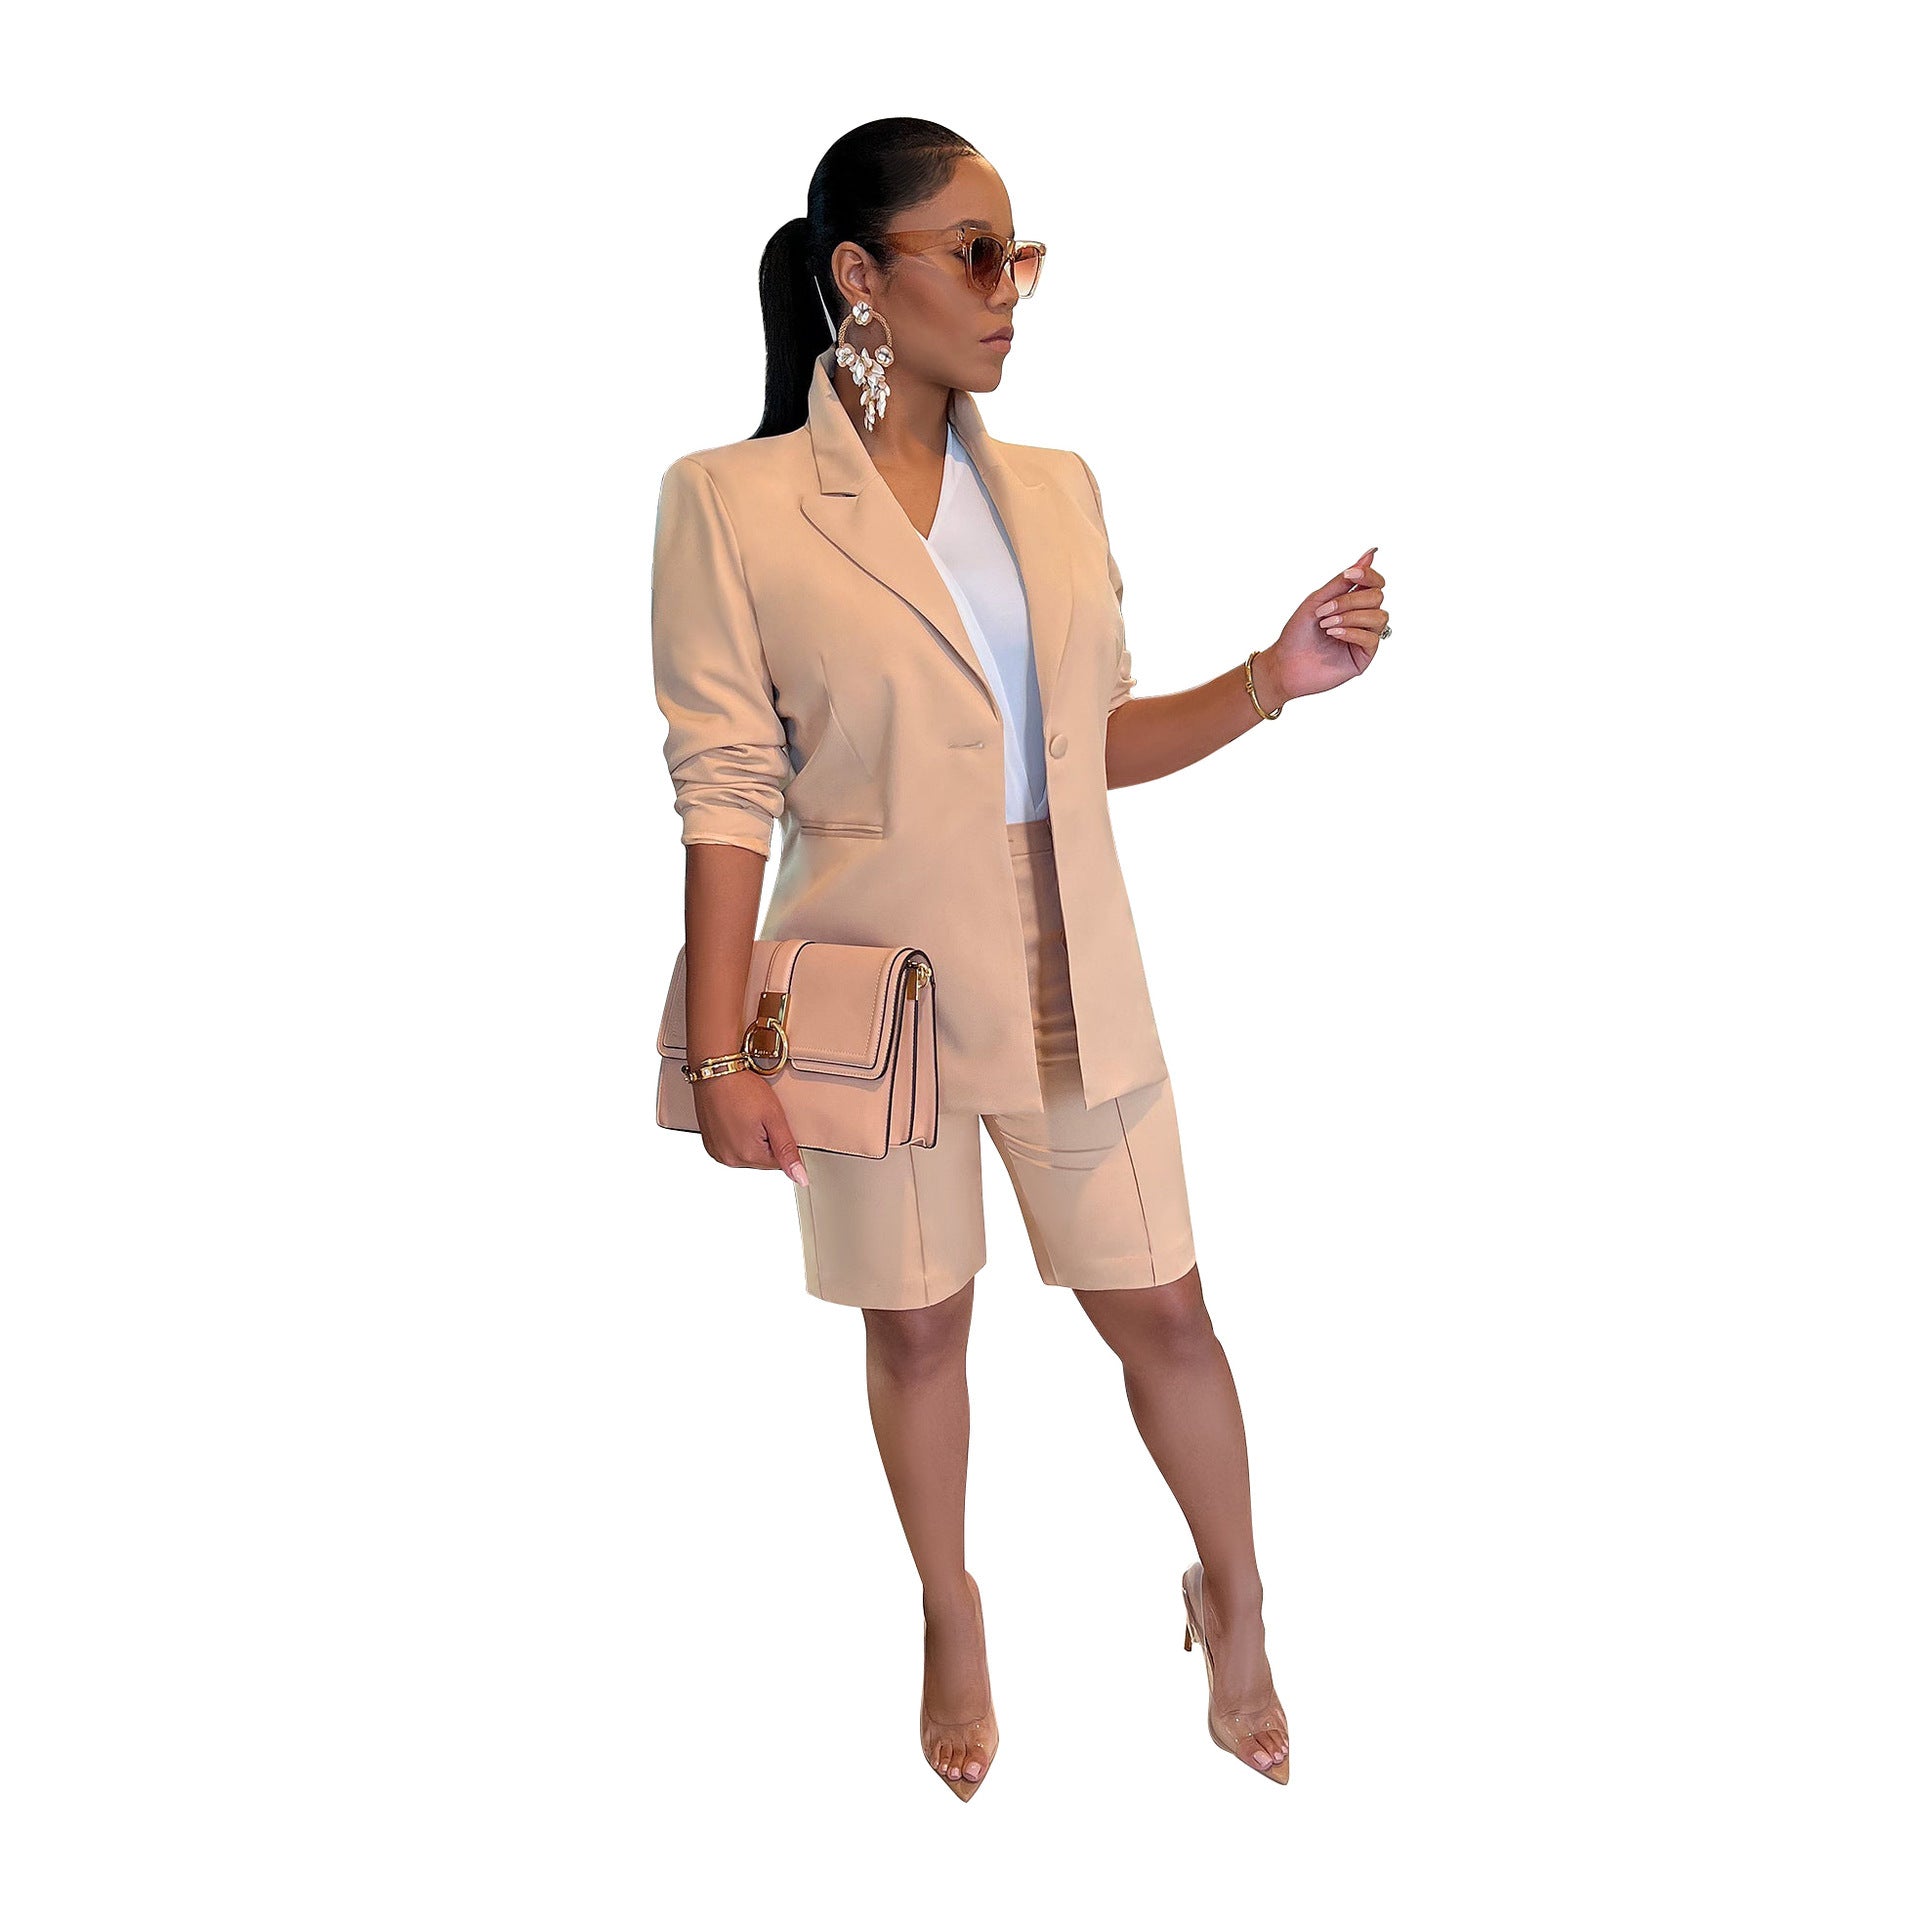 Plus Color Women's Polyester Coat Shorts Two-piece Suits